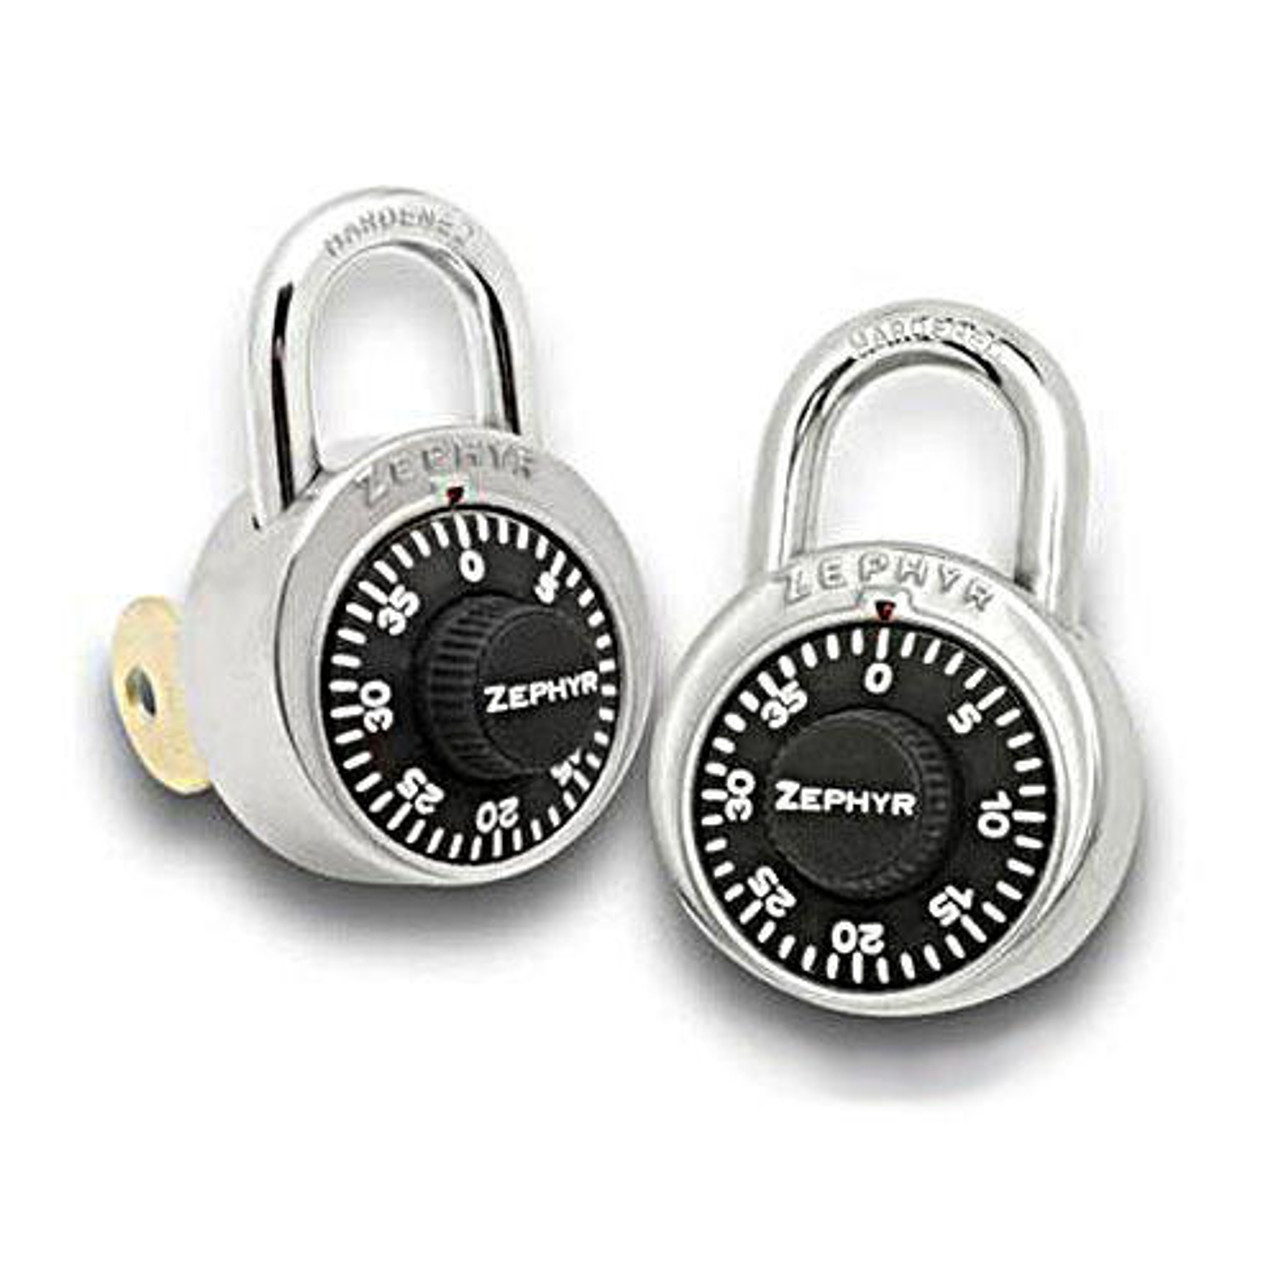 zephyr-key-controlled-combination-padlock/